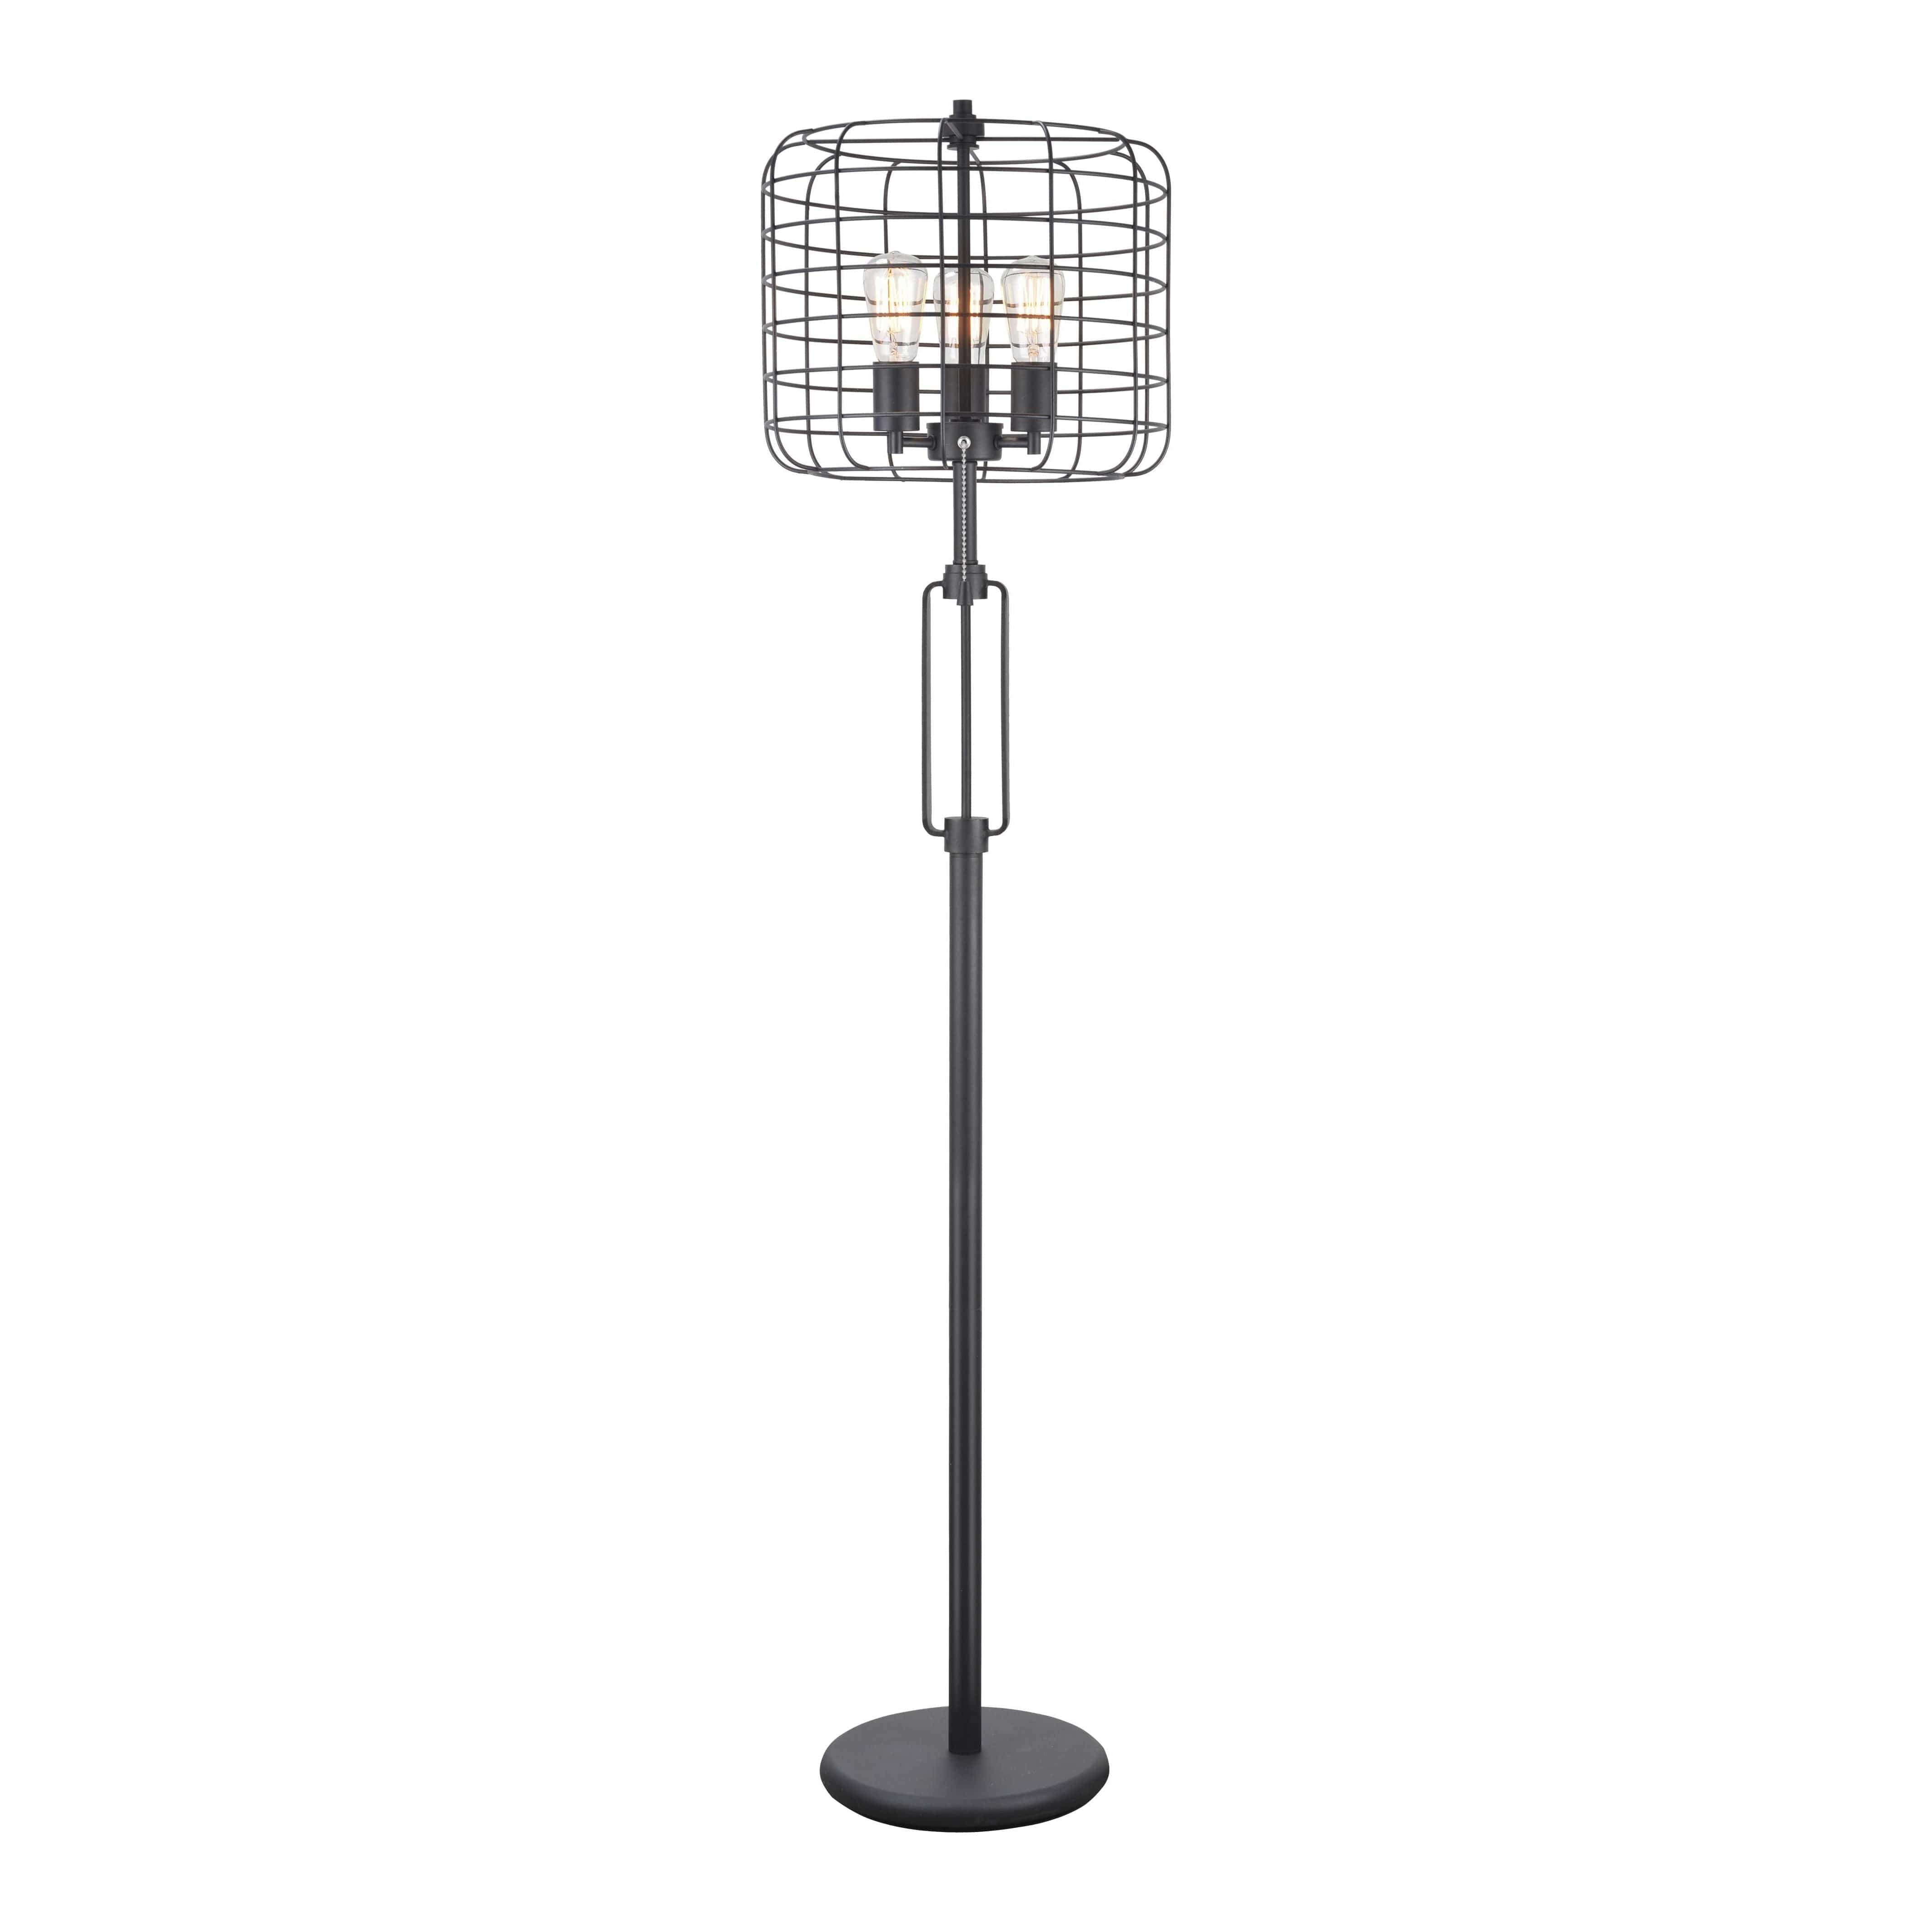 Benzara Metal Base Caged Shade Lamp With Open Design And Circular Base, Black By Benzara Floor Lamps BM207453